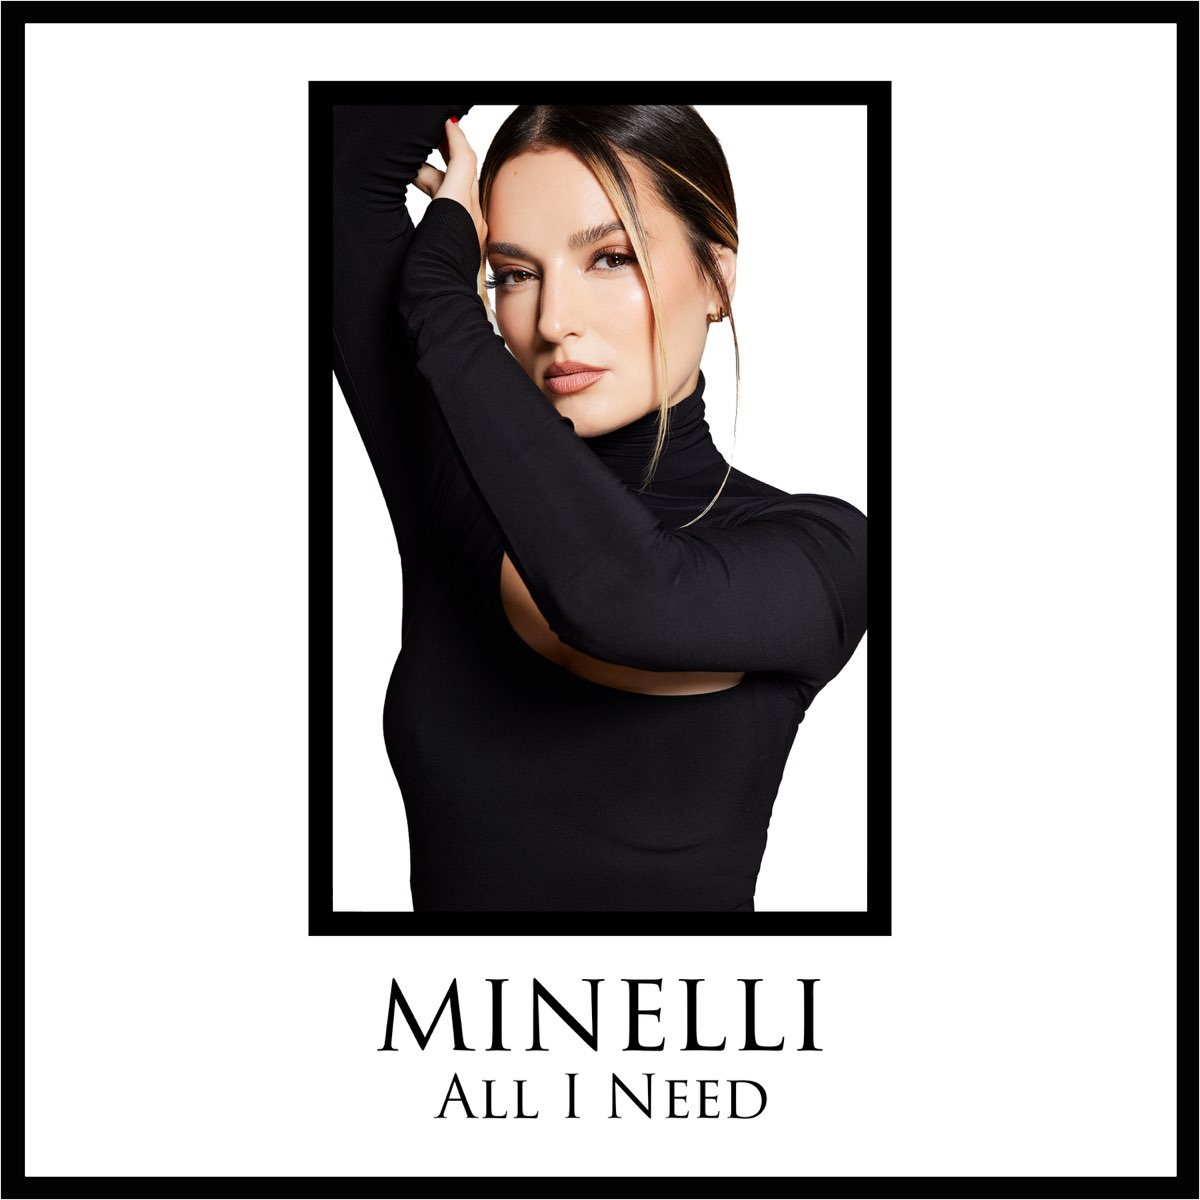 All I Need - Single - Album by Minelli - Apple Music